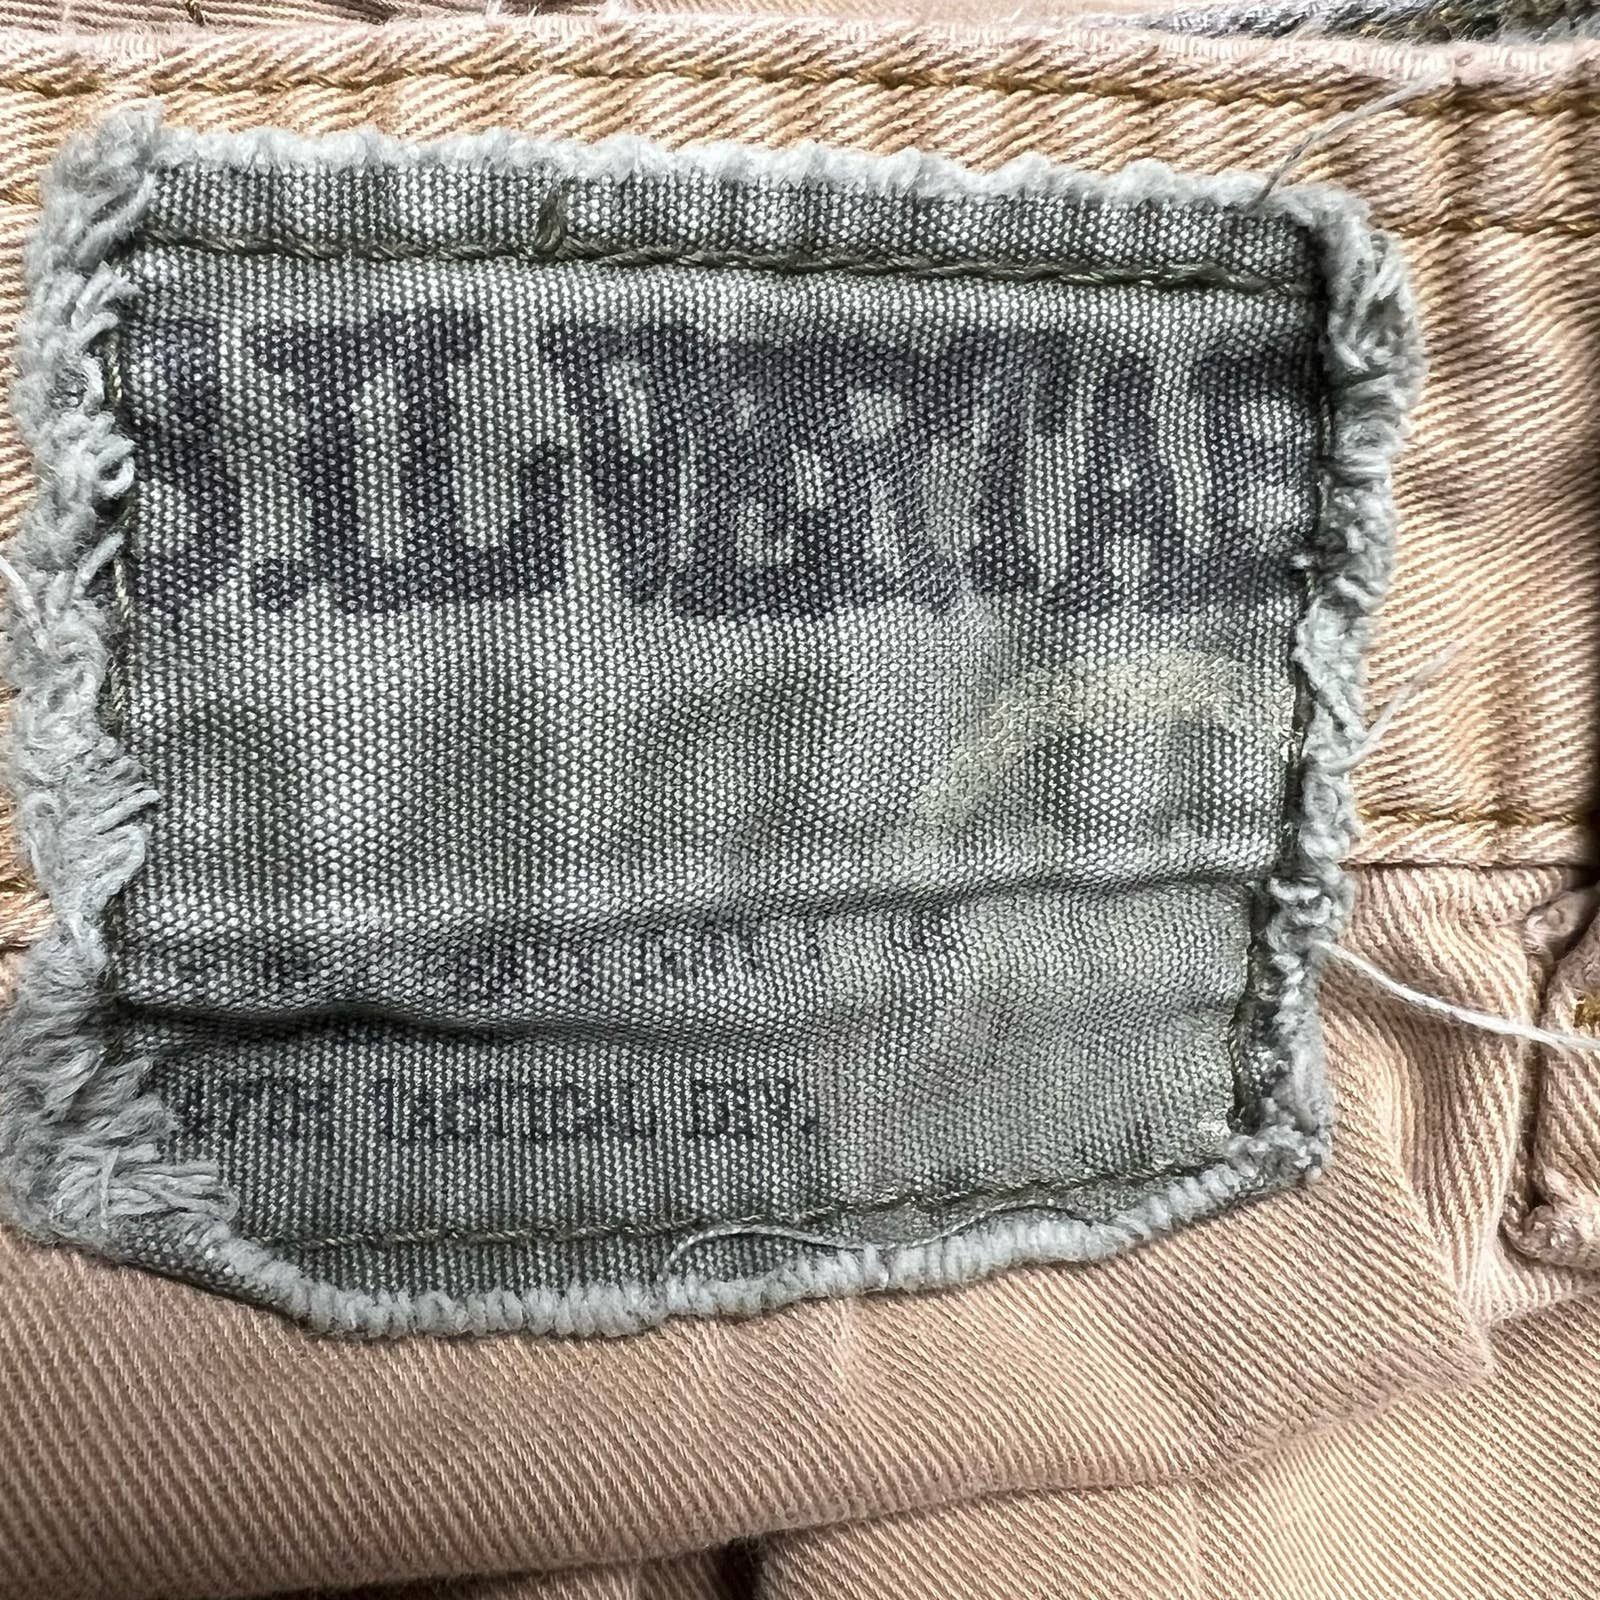 Levi's Vintage Silvertab 47 Tactical Cargo Pants Tan Size 40x32 Size US 40 / EU 56 - 5 Preview